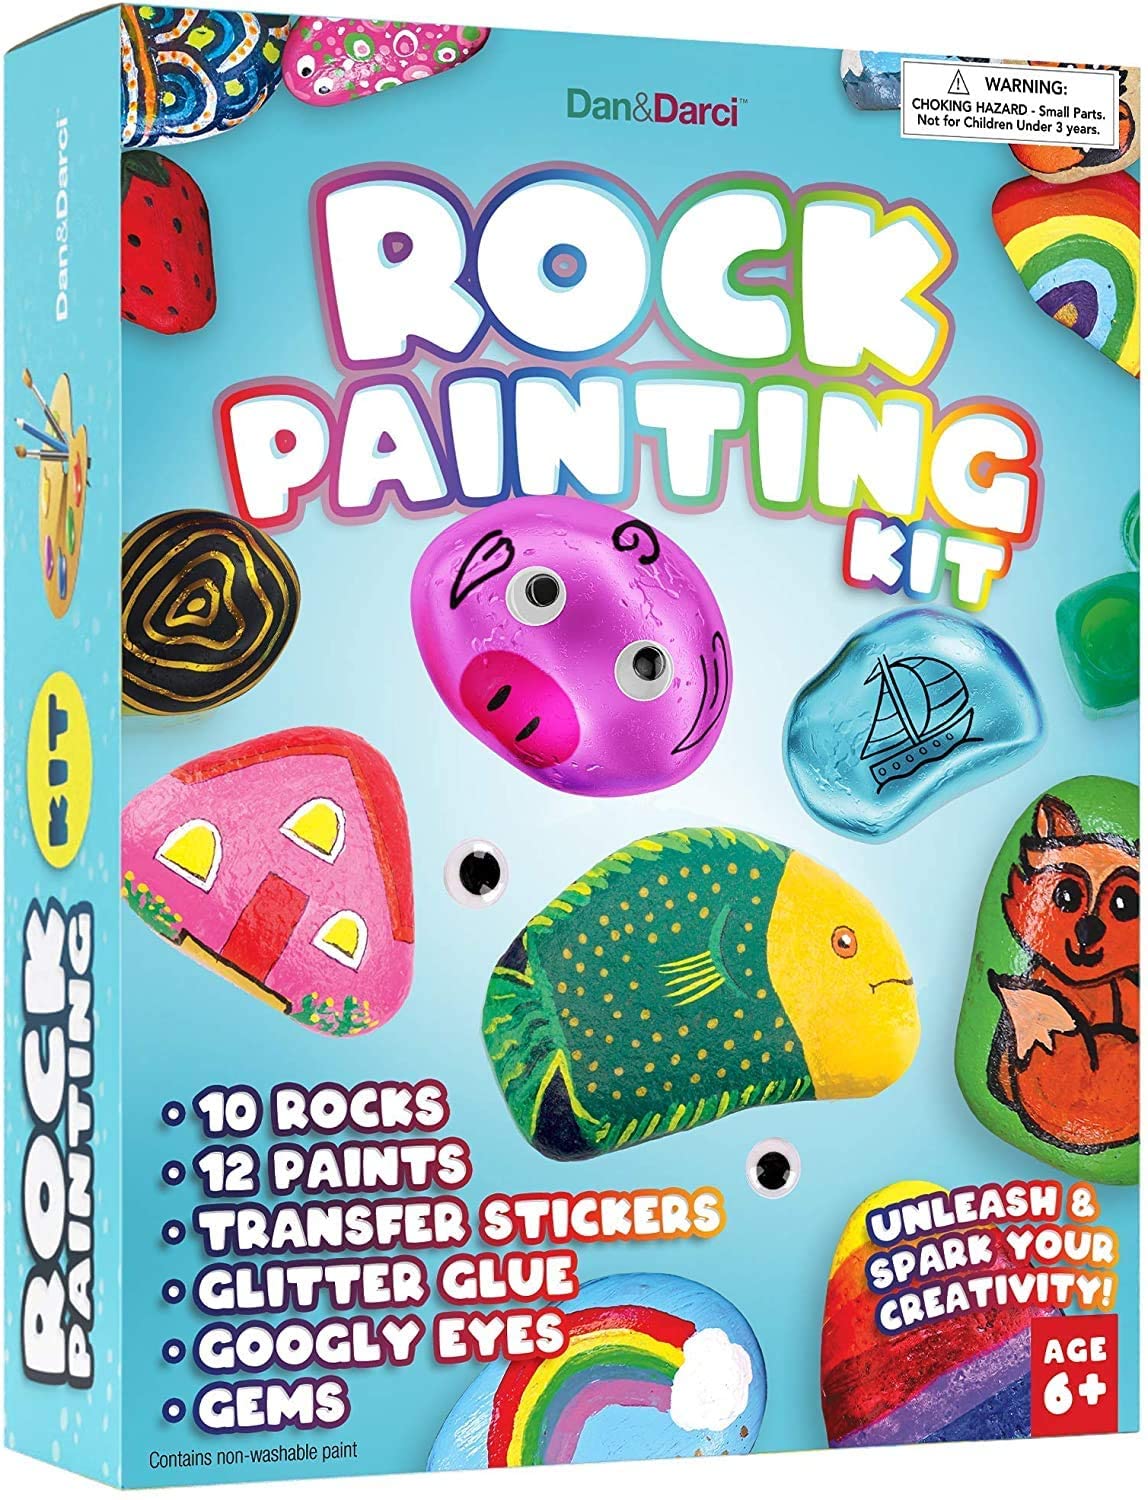 Dan&Darci Creative Rock Painting Art Kit For 9-12 Year Olds